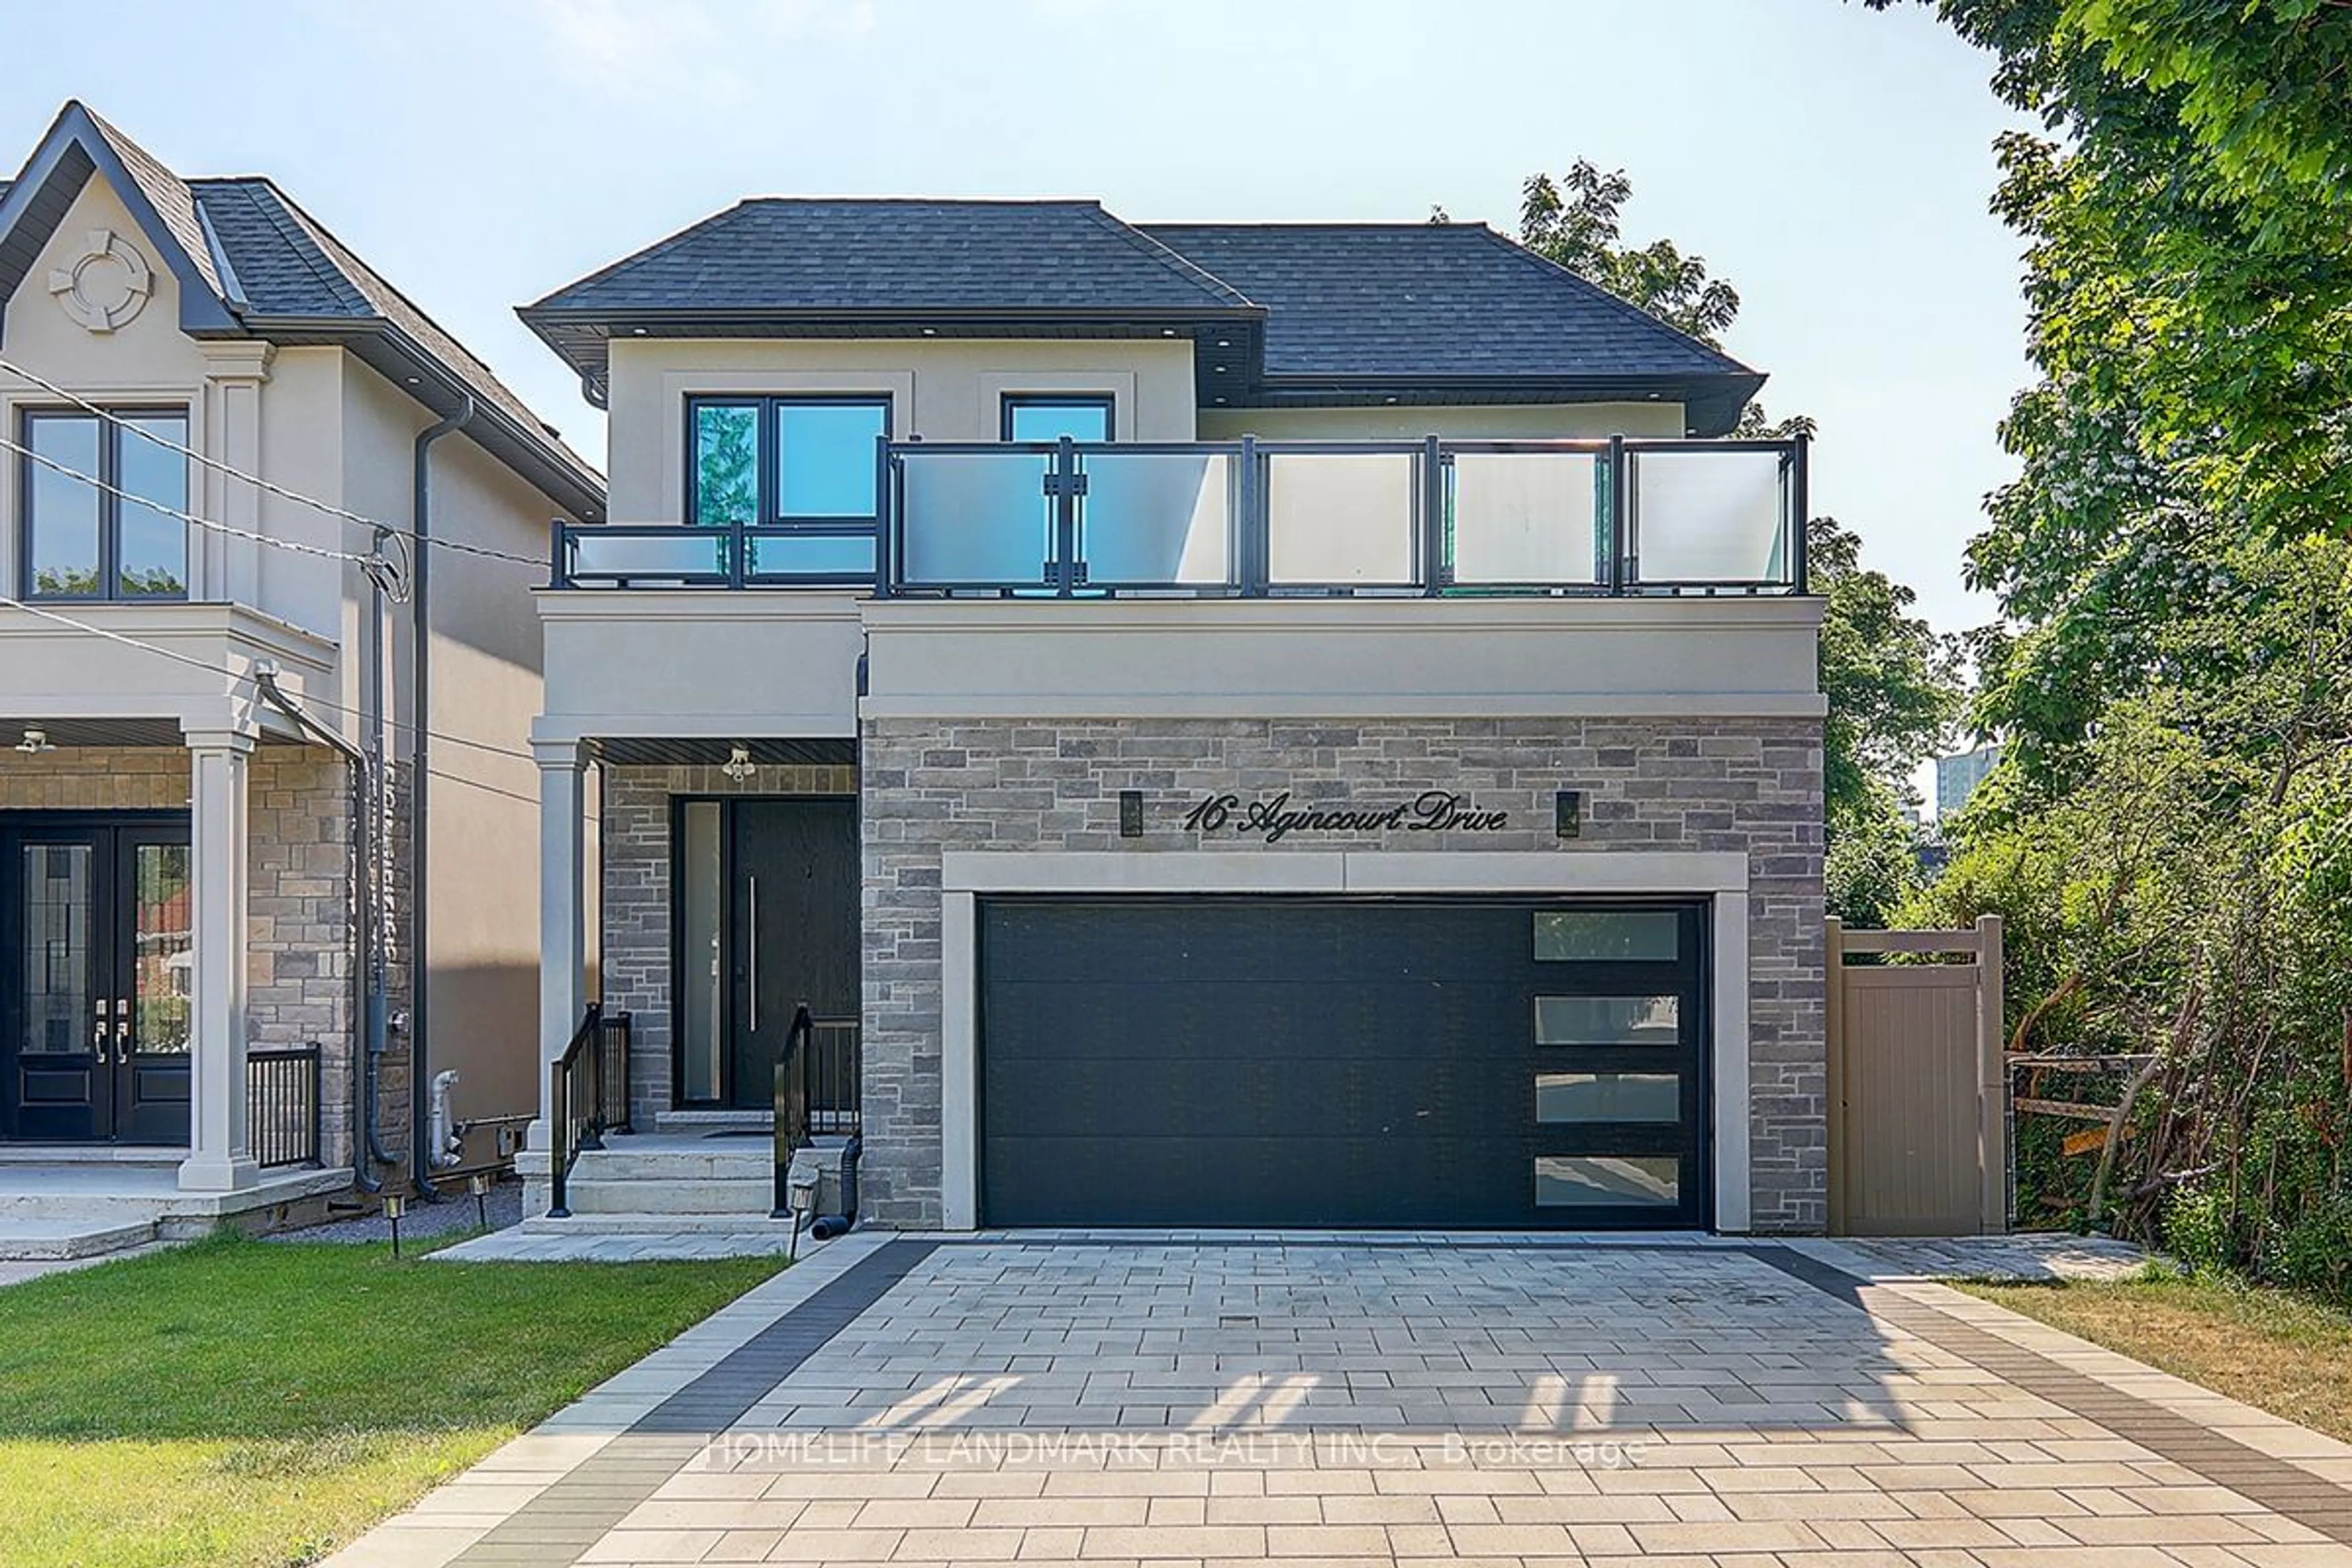 Home with brick exterior material for 16 Agincourt Dr, Toronto Ontario M1S 1M3